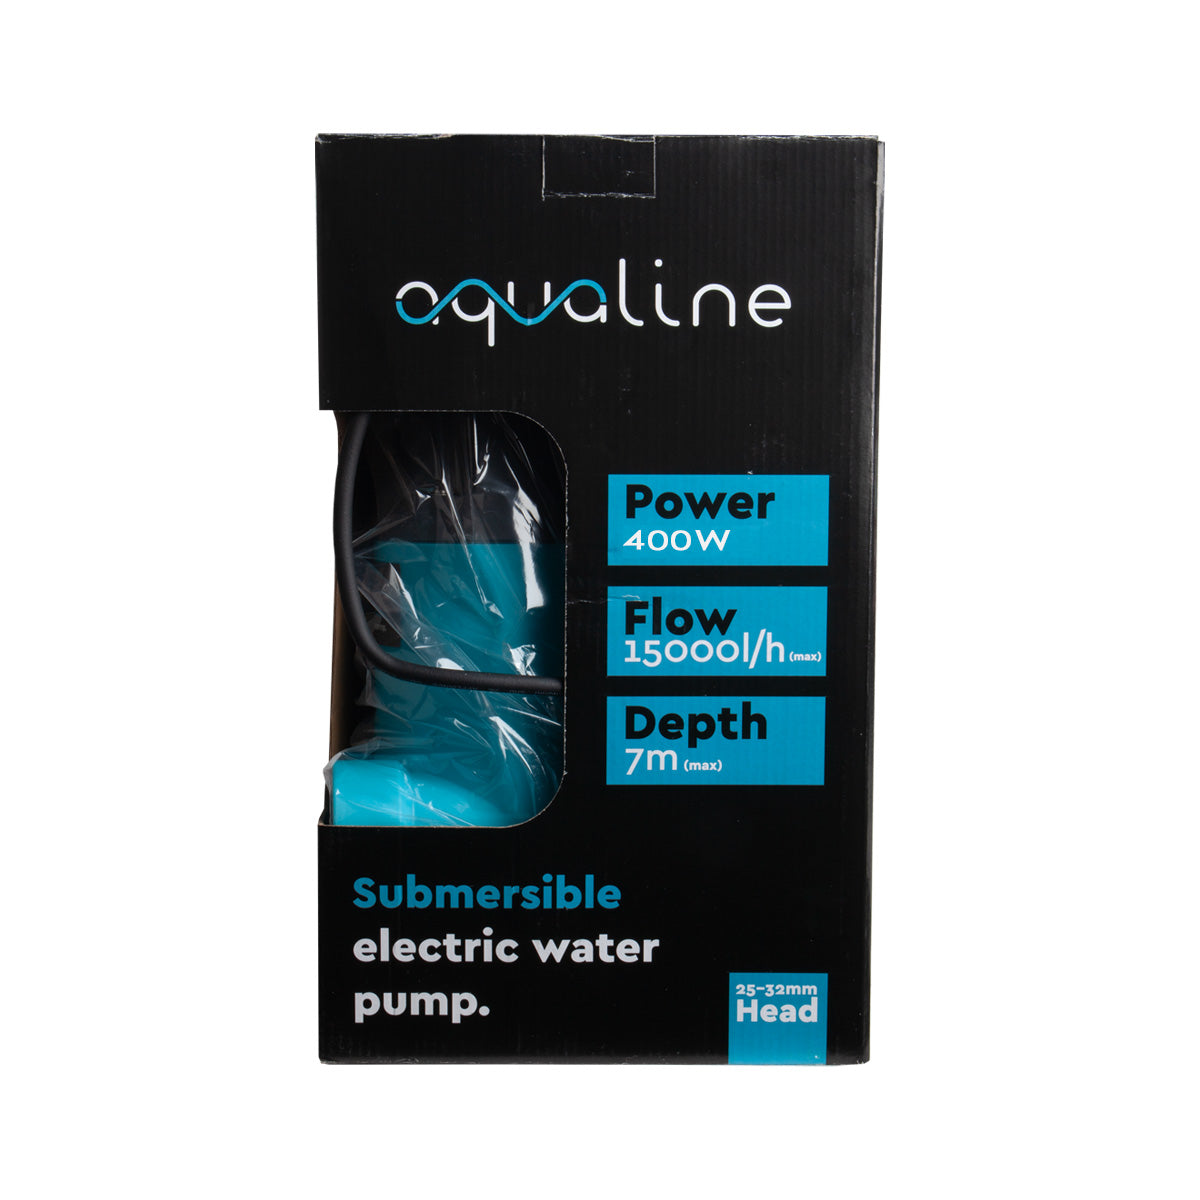 Aqualine Submersible Water Pumps